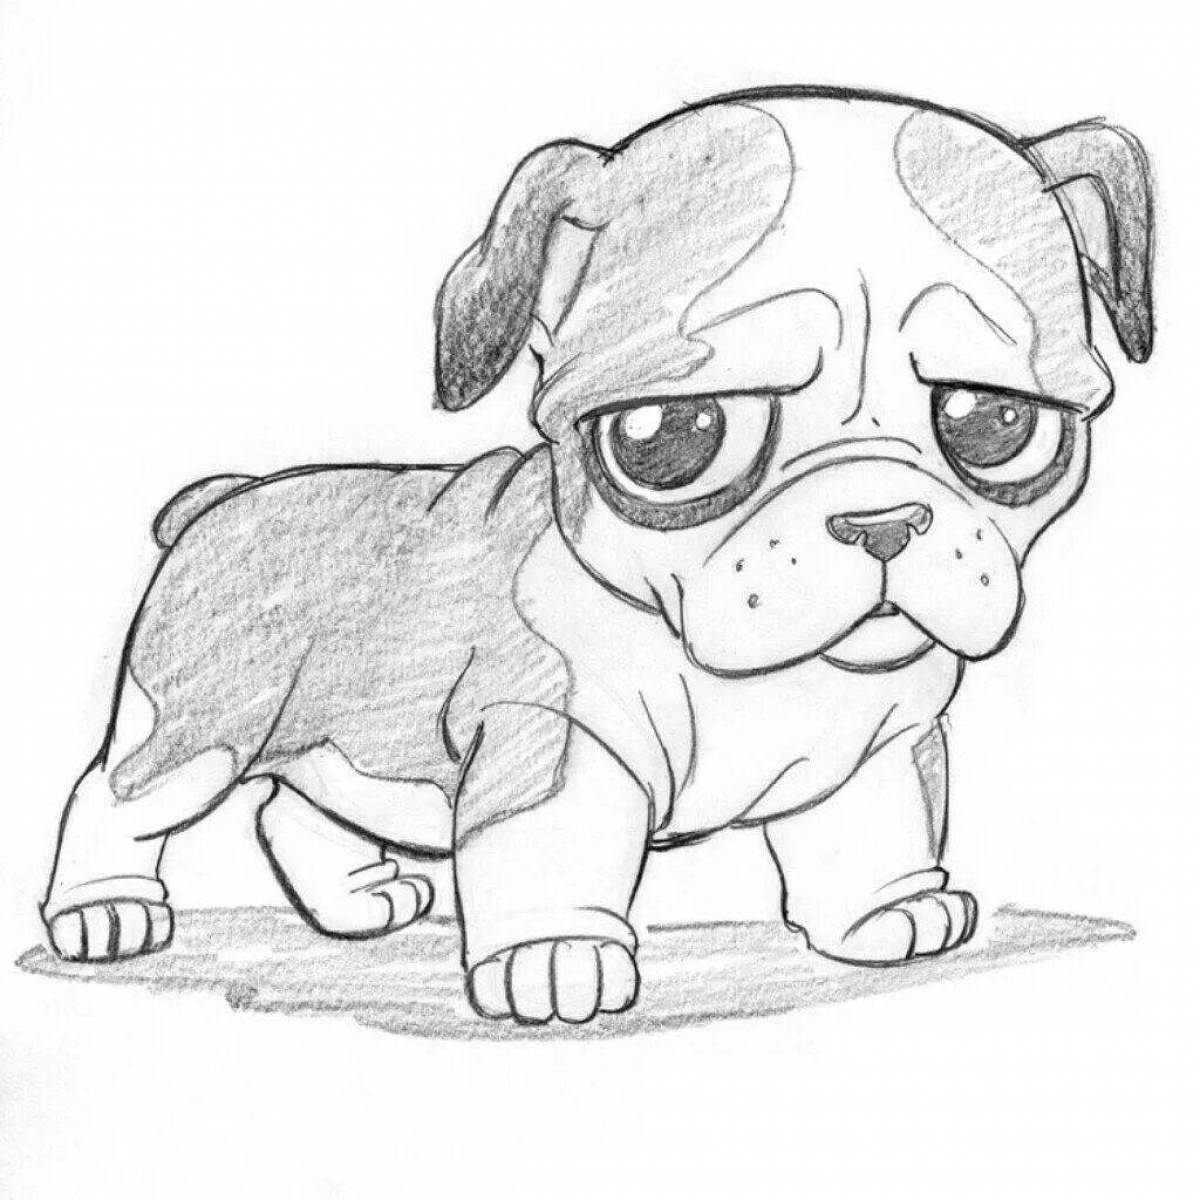 Картинки рисунки. Рисунки карандашом. Щенки для срисовки карандашом. Собачка для срисовки карандашом. Рисунок собаки карандашом для срисовки.